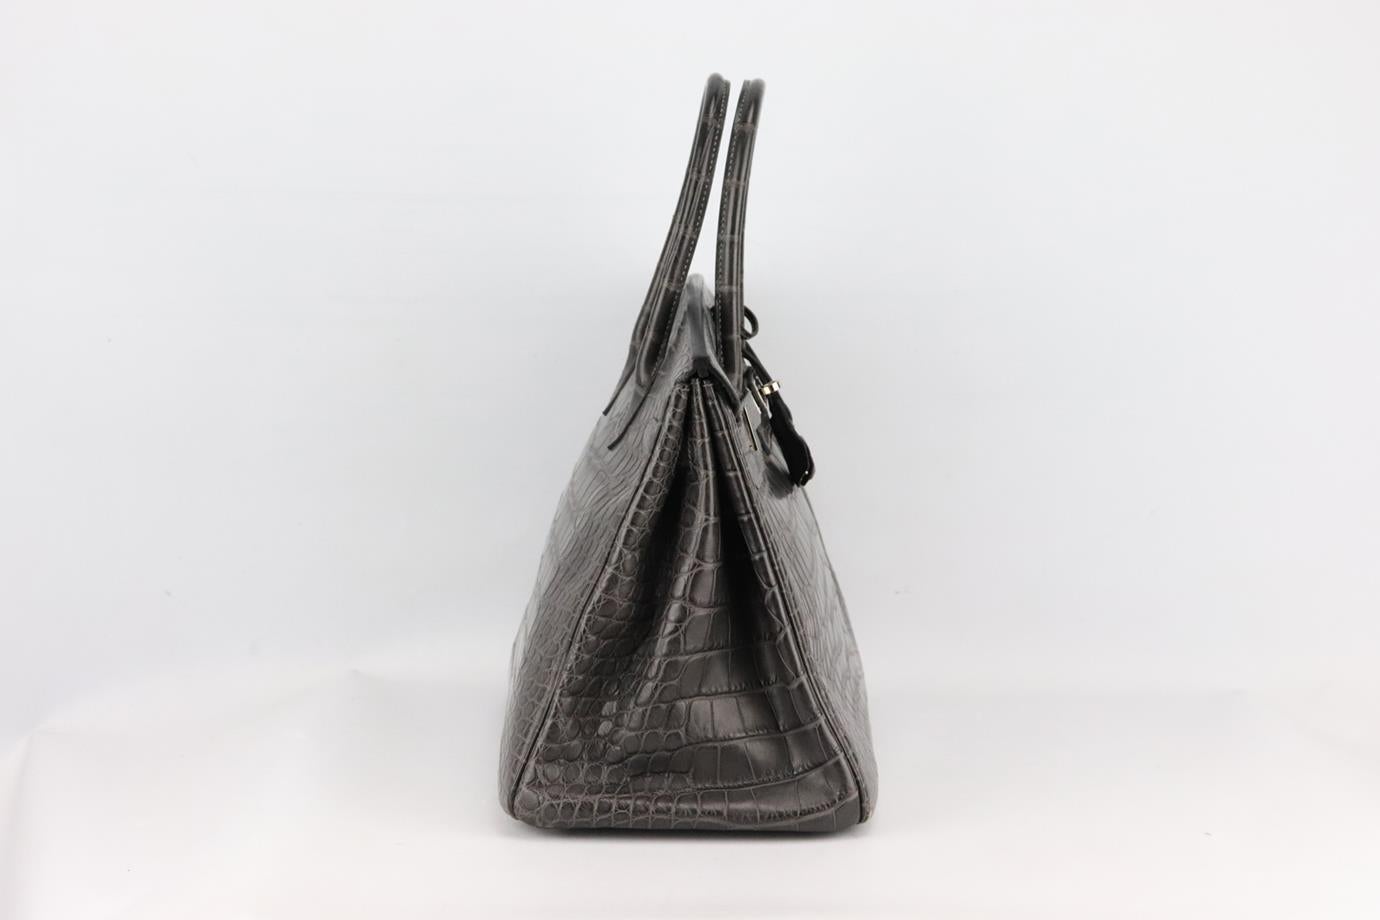 <ul>
<li>Hermès 2010 Birkin 35cm Matte Alligator Mississippiensis leather bag.</li>
<li>Made in France, this beautiful 2010 Hermès ‘Birkin’ handbag has been made from grey-tone ‘Alligator Mississippiensis’ exterior in ‘Graphite’ with matching